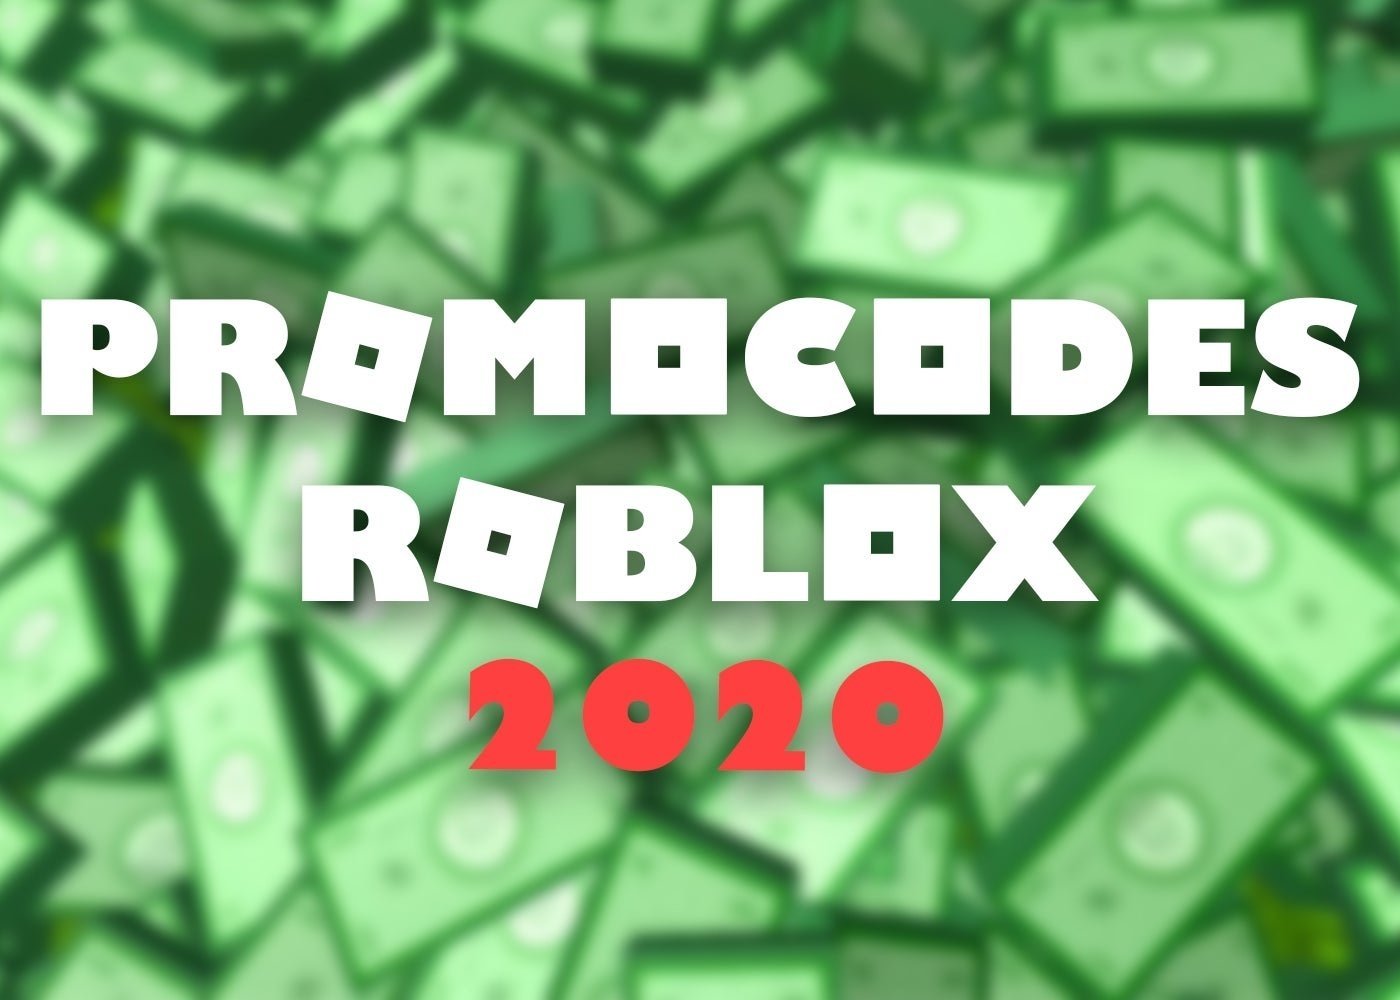 cuentas gratis de roblox hacks get 5000 robux for watching